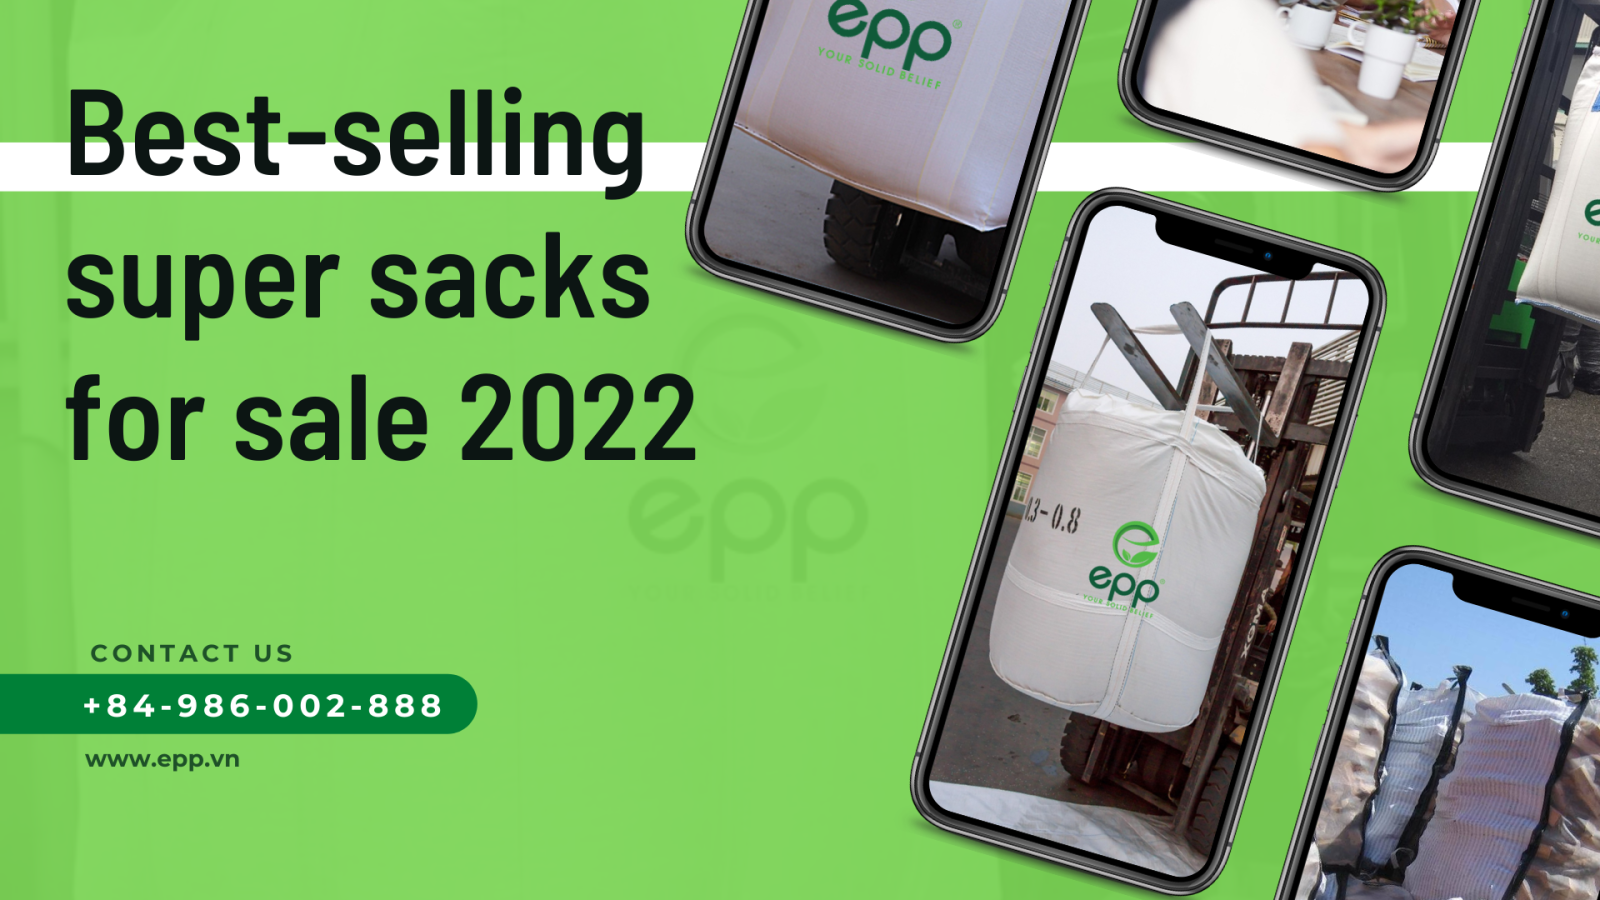 Best-selling-super-sacks-for-sale-2022.png